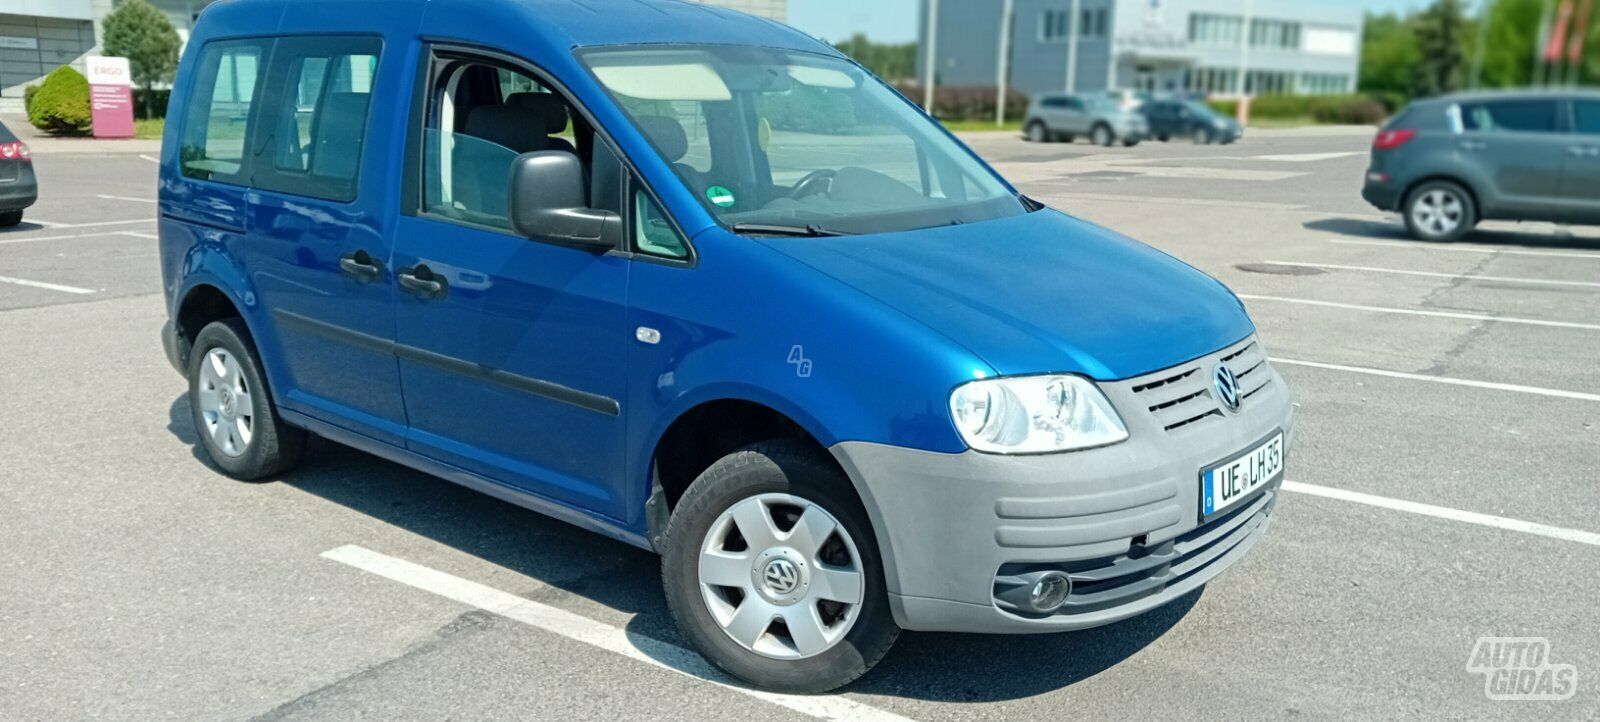 Volkswagen Caddy TECH IKI 2026-06 2006 y